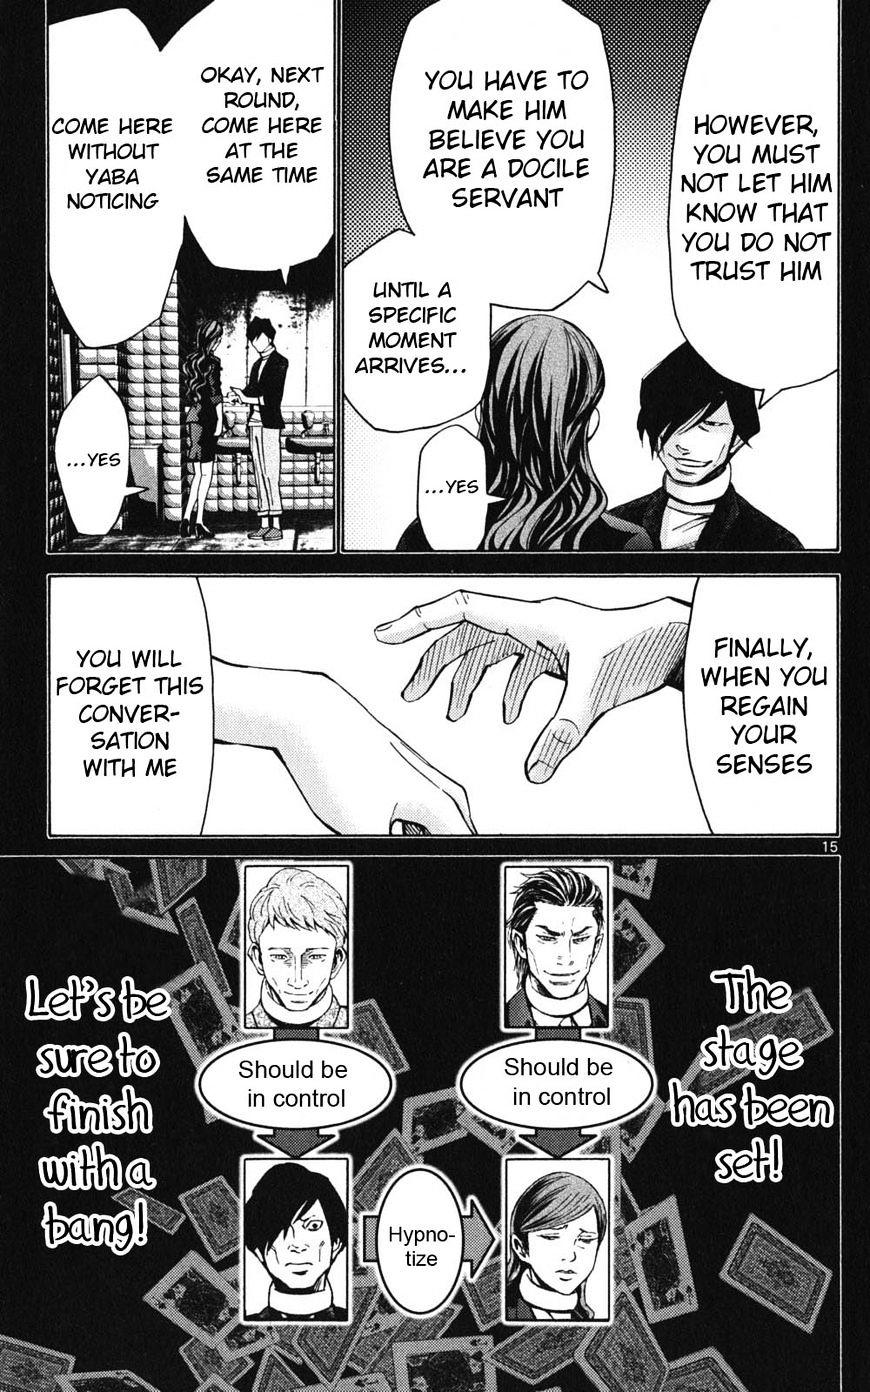 Imawa No Kuni No Alice Chapter 48 : Jack Of Hearts (4) page 15 - Mangakakalot